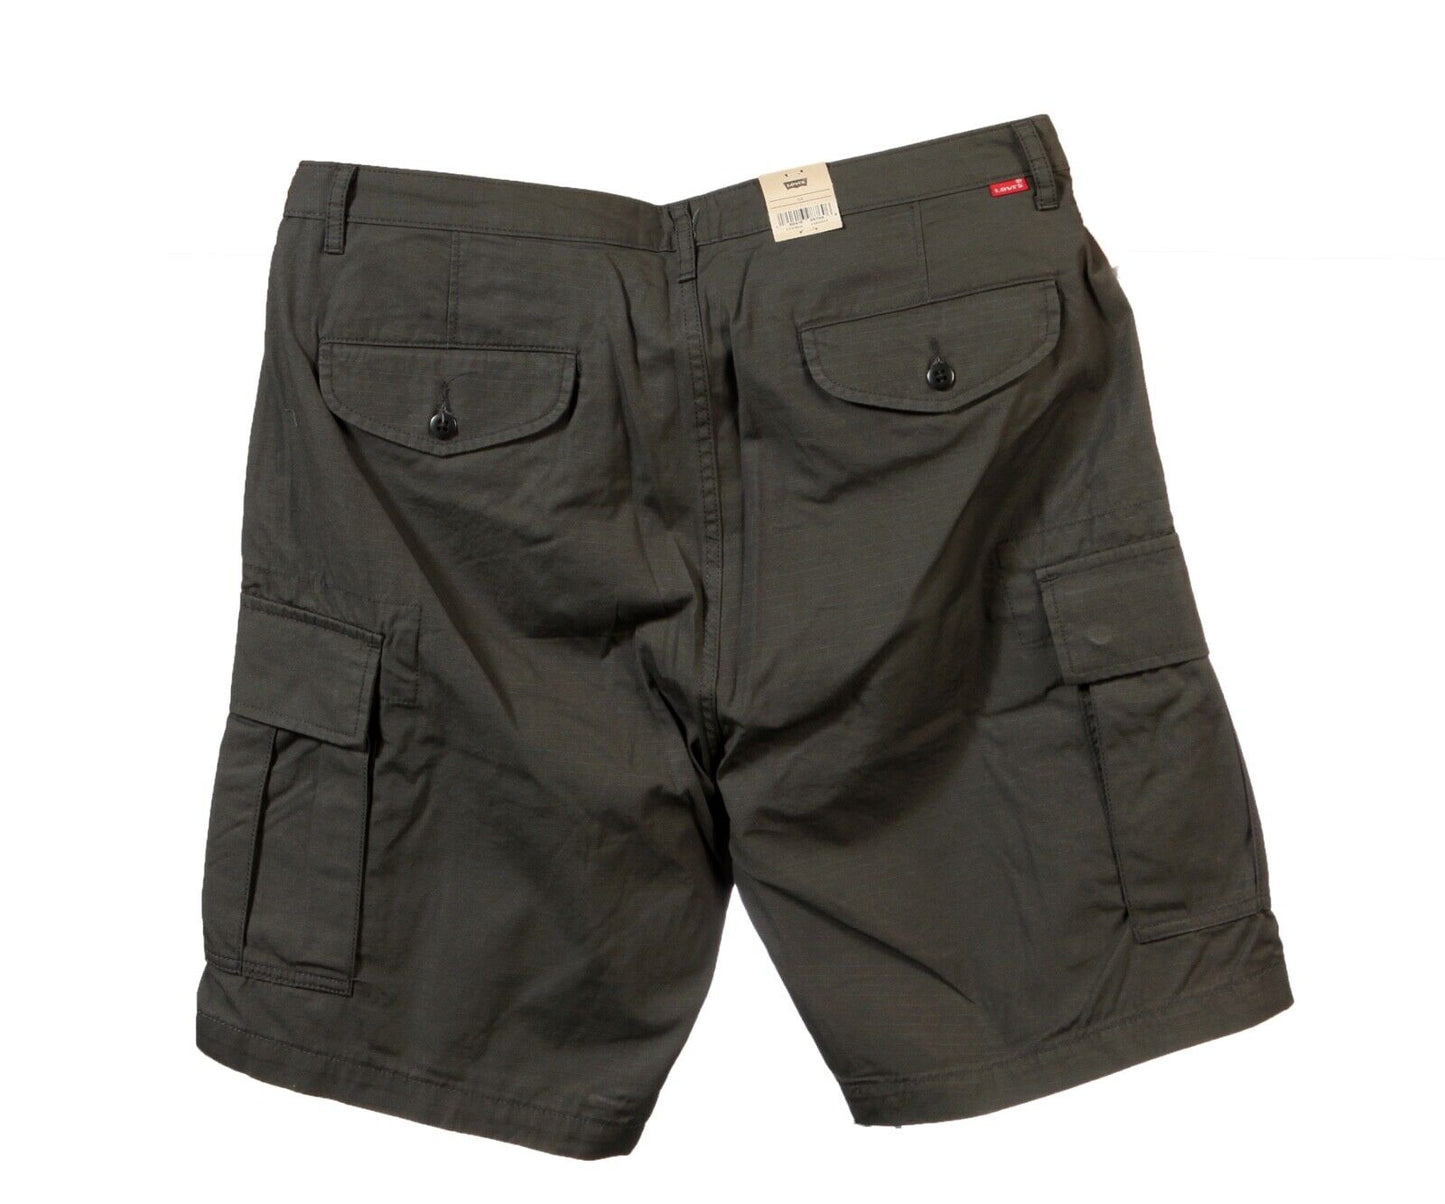 Levi’s Men’s Carrier Cargo Shorts I Wash: Graphite I Style: 23251-0060